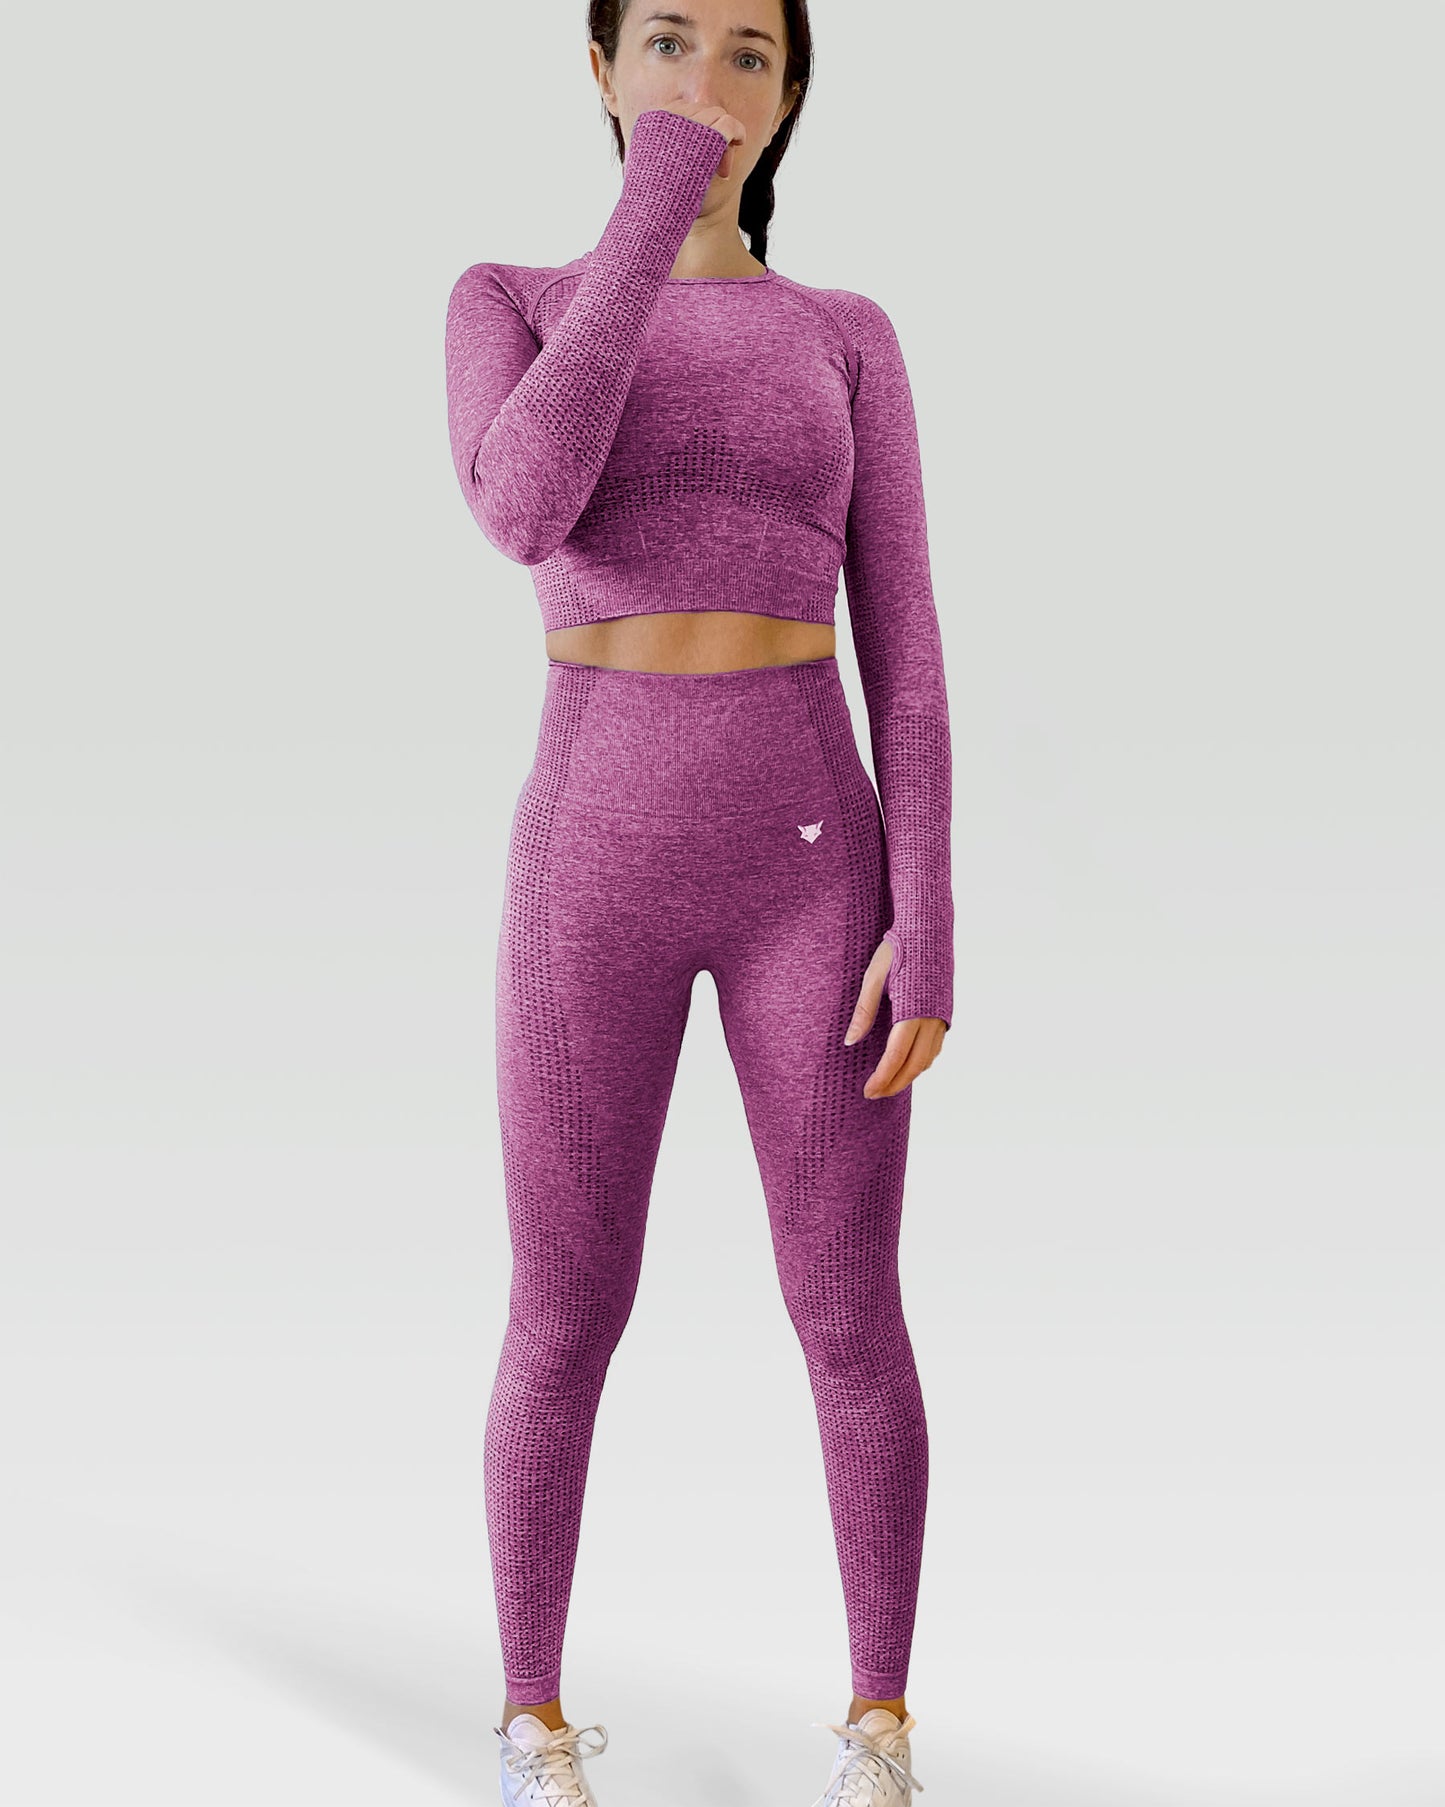 Elite 3 pieces activewear set - Purple